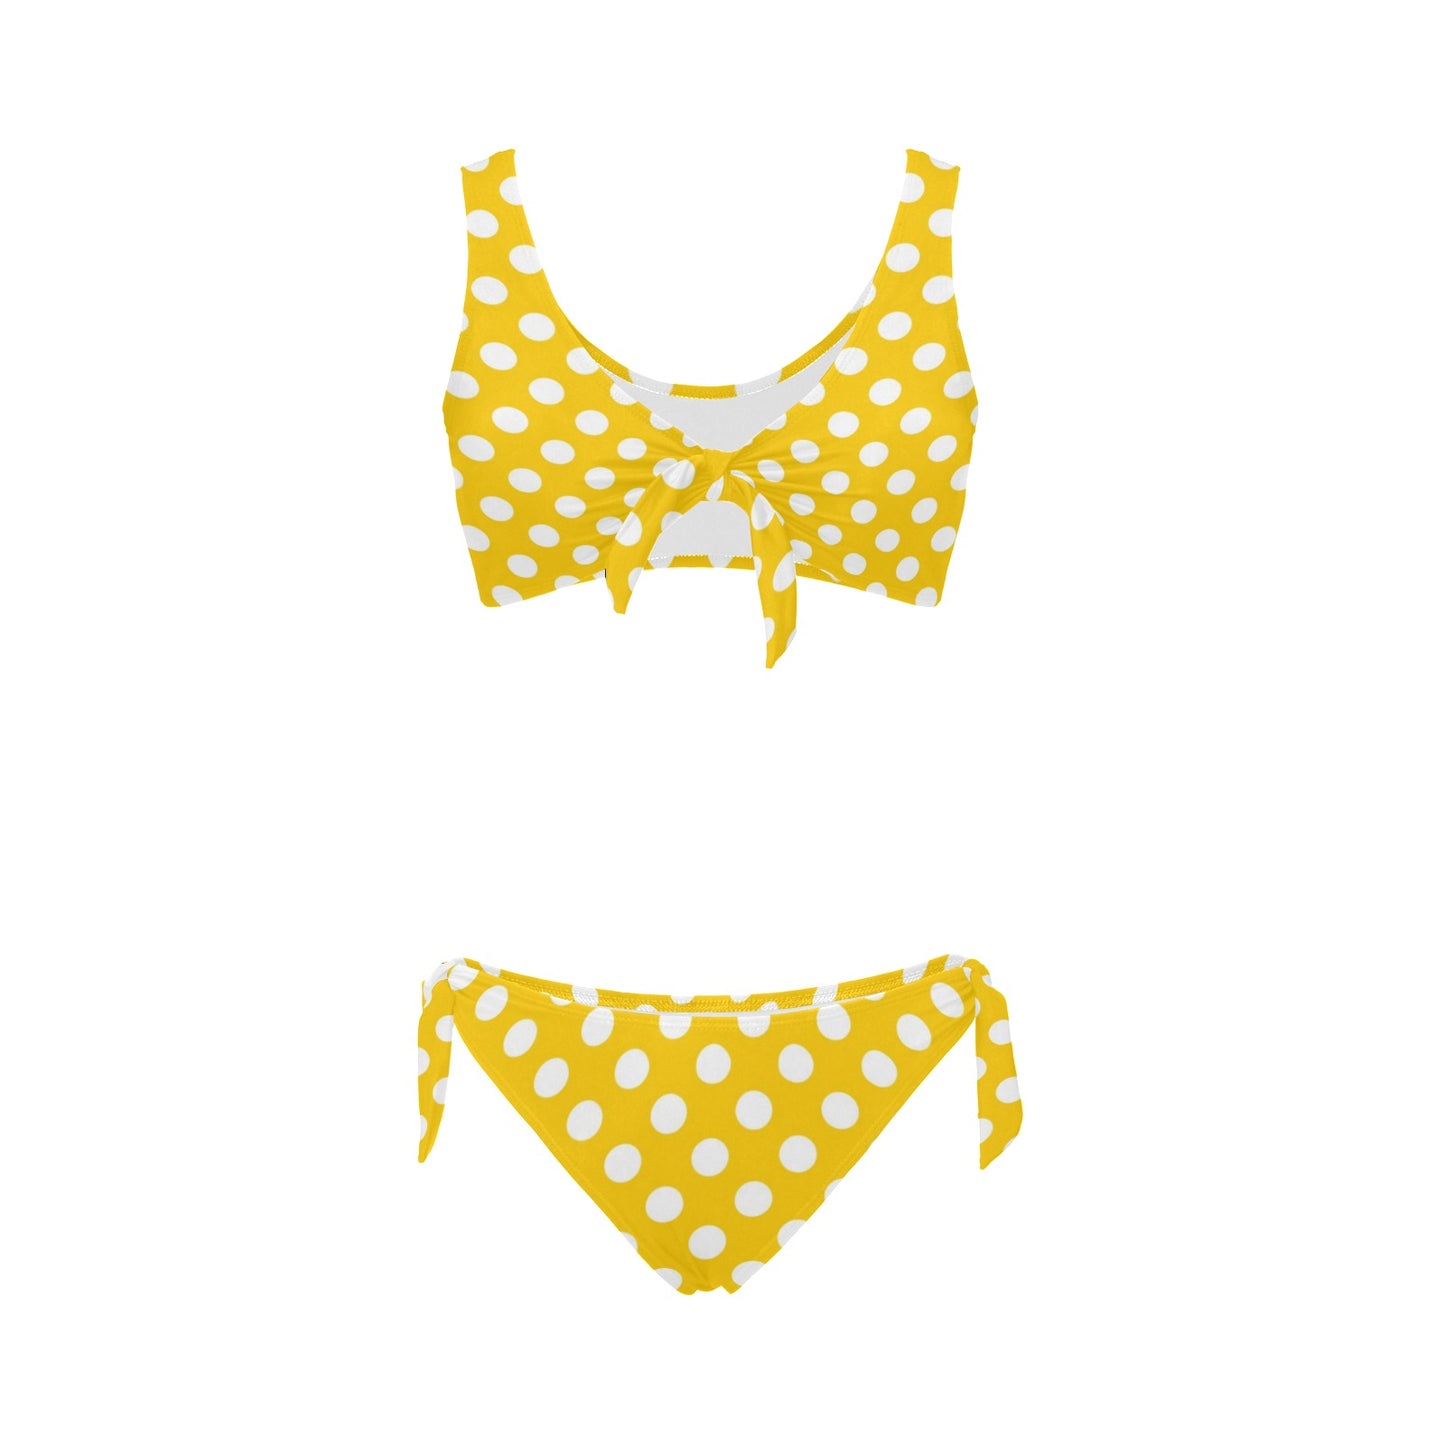 Yellow Polka Dot Bikini Set, Two Piece Front Bow Tie Knot Swimsuit Women High Waisted Bottom Top Sexy String Swimsuits Padded Swimwear